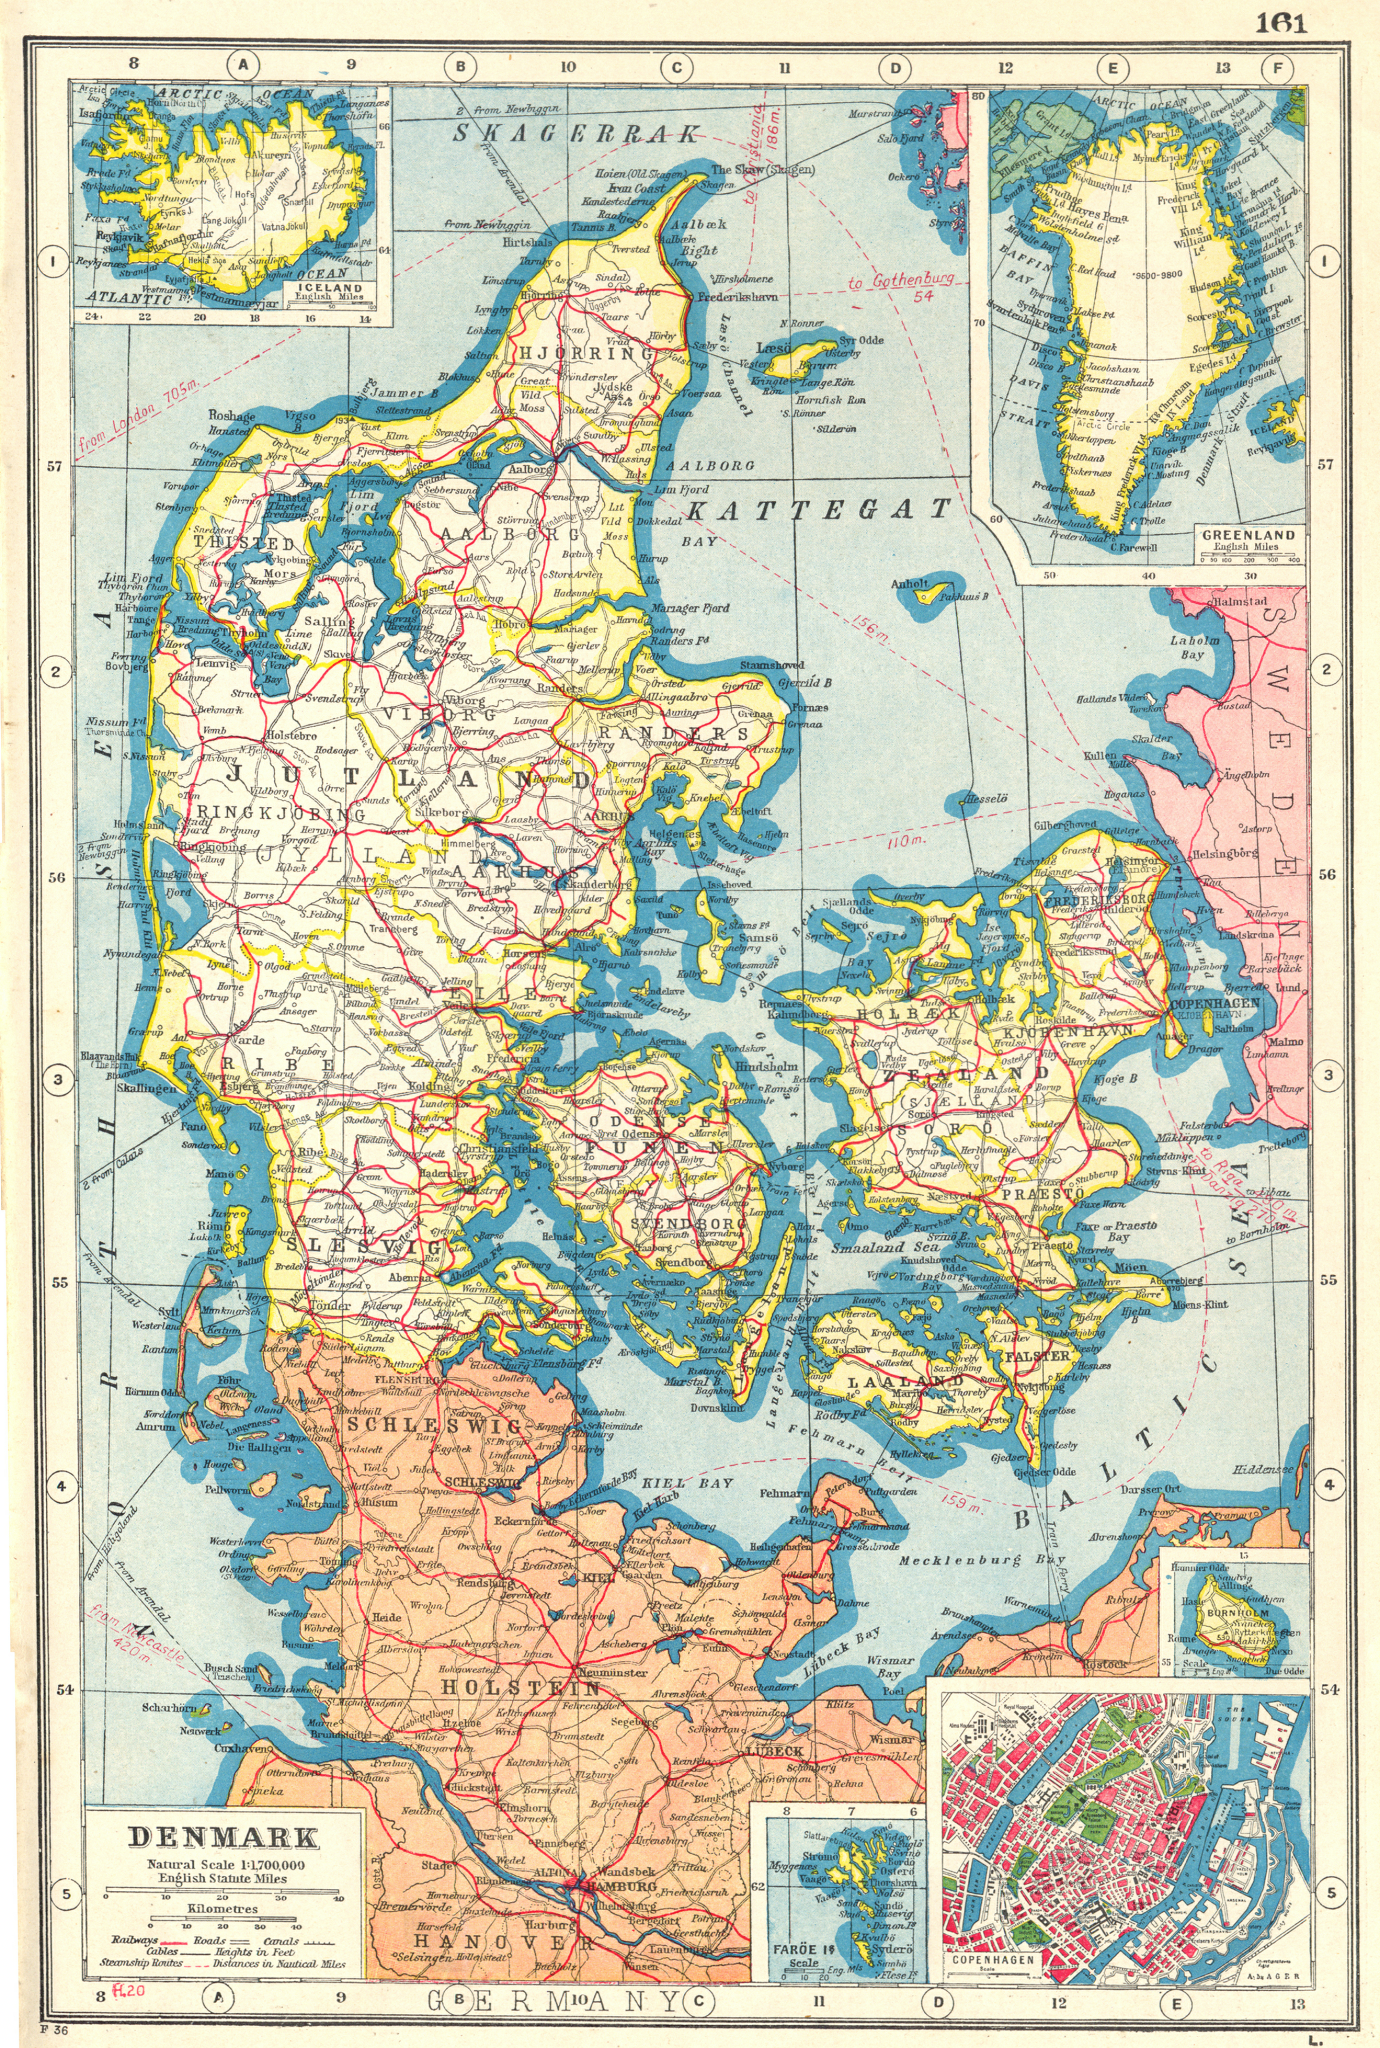 Associate Product DENMARK. inset Iceland Greenland Faroe islands Copenhagen Bornholm 1920 map